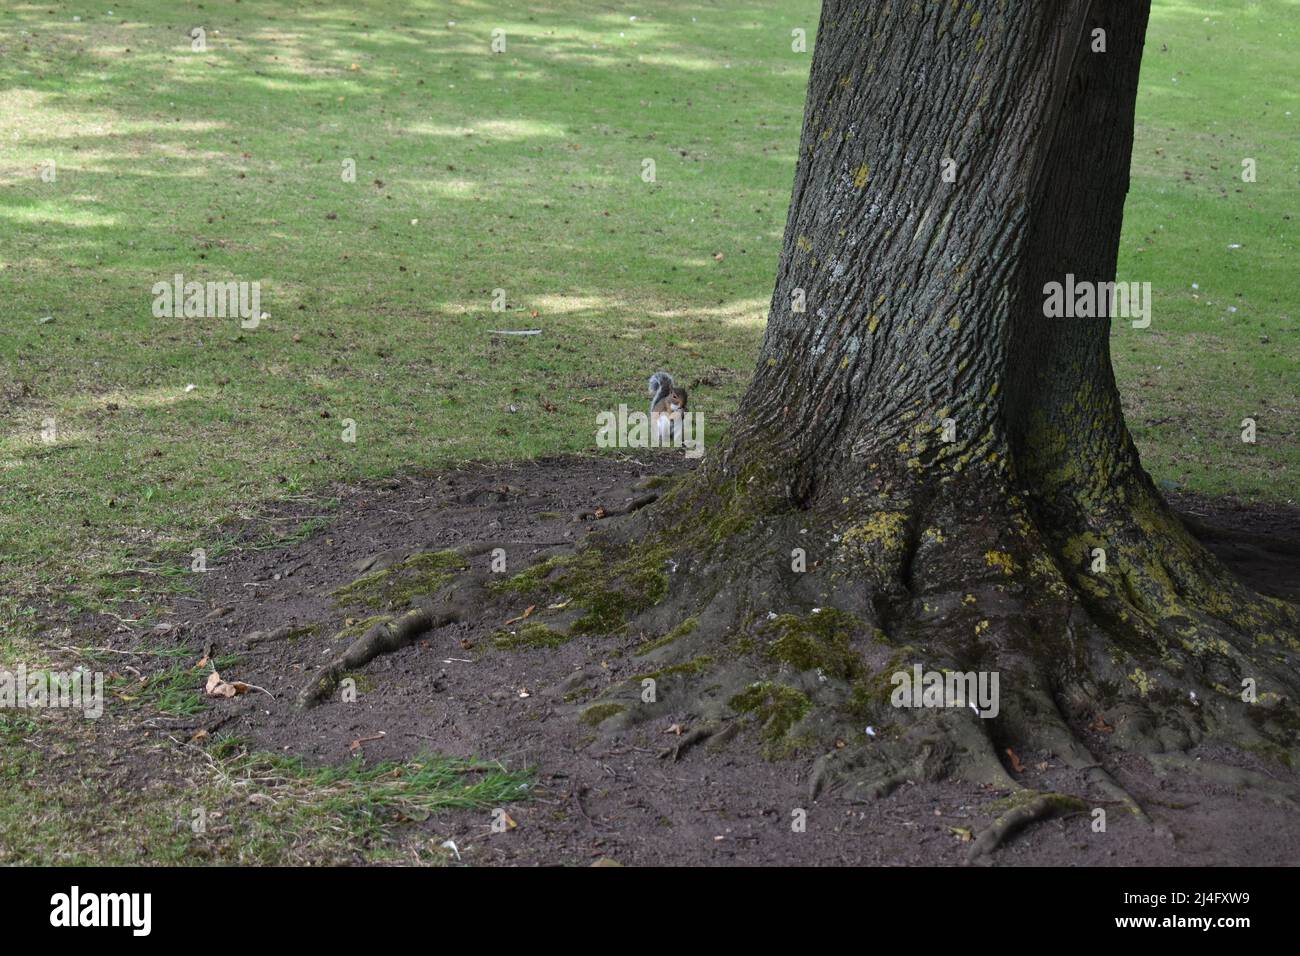 Grauhörnchen, Squirrel, Grey Squirrel, Invasive Species, Neozoon, Phoenix Park, Dubin, Tree, Meadow, Cute, Bushy Tail, Autumn, Curious, Eichhörnchen Stock Photo